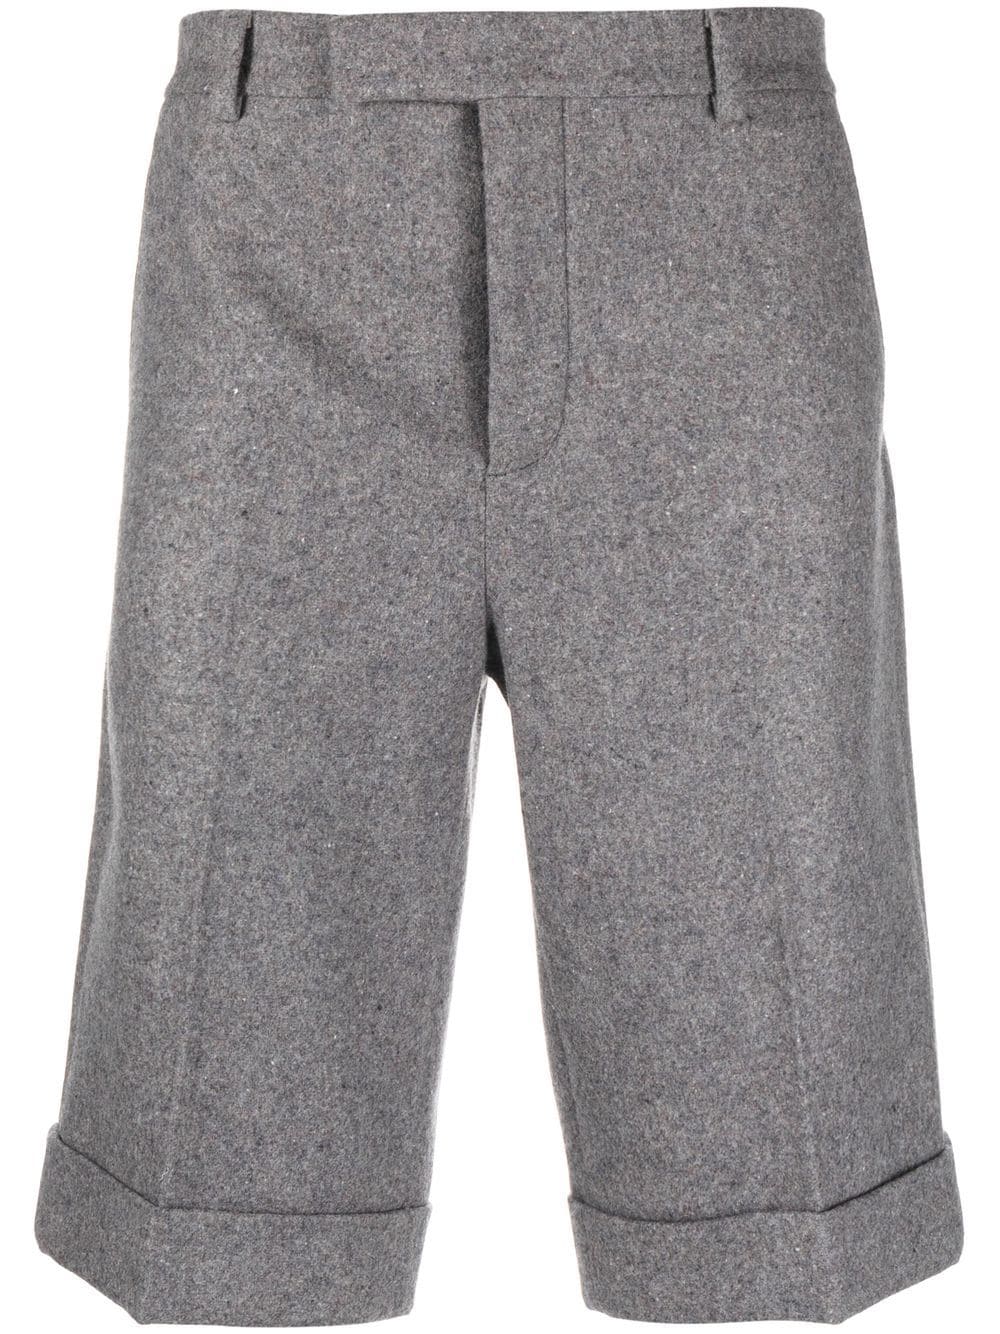 GUCCI Wool shorts